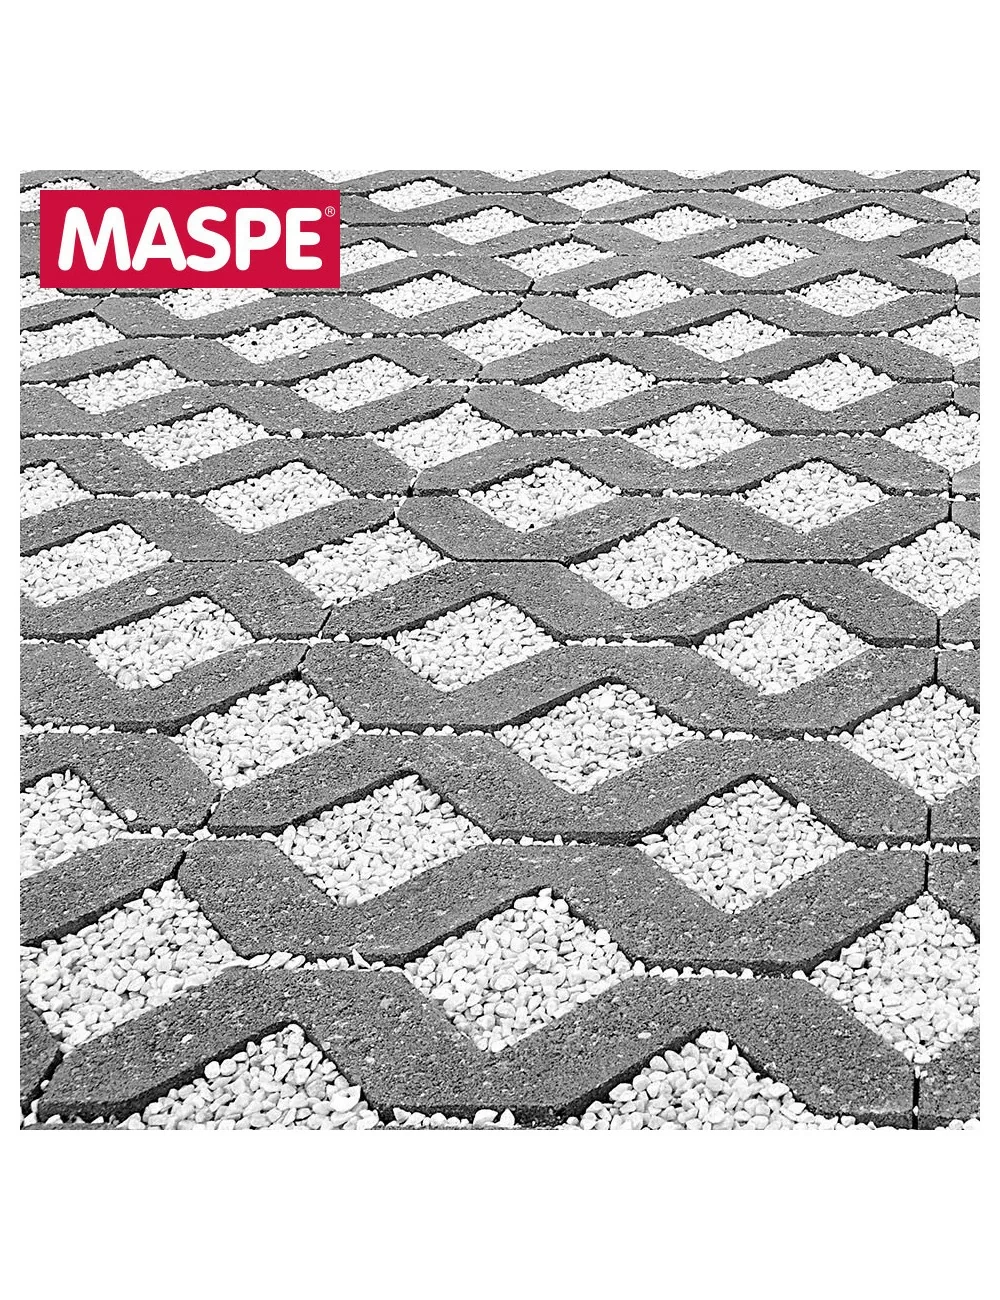 Detail of 60x40 maspe outdoor self-locking grating flooring